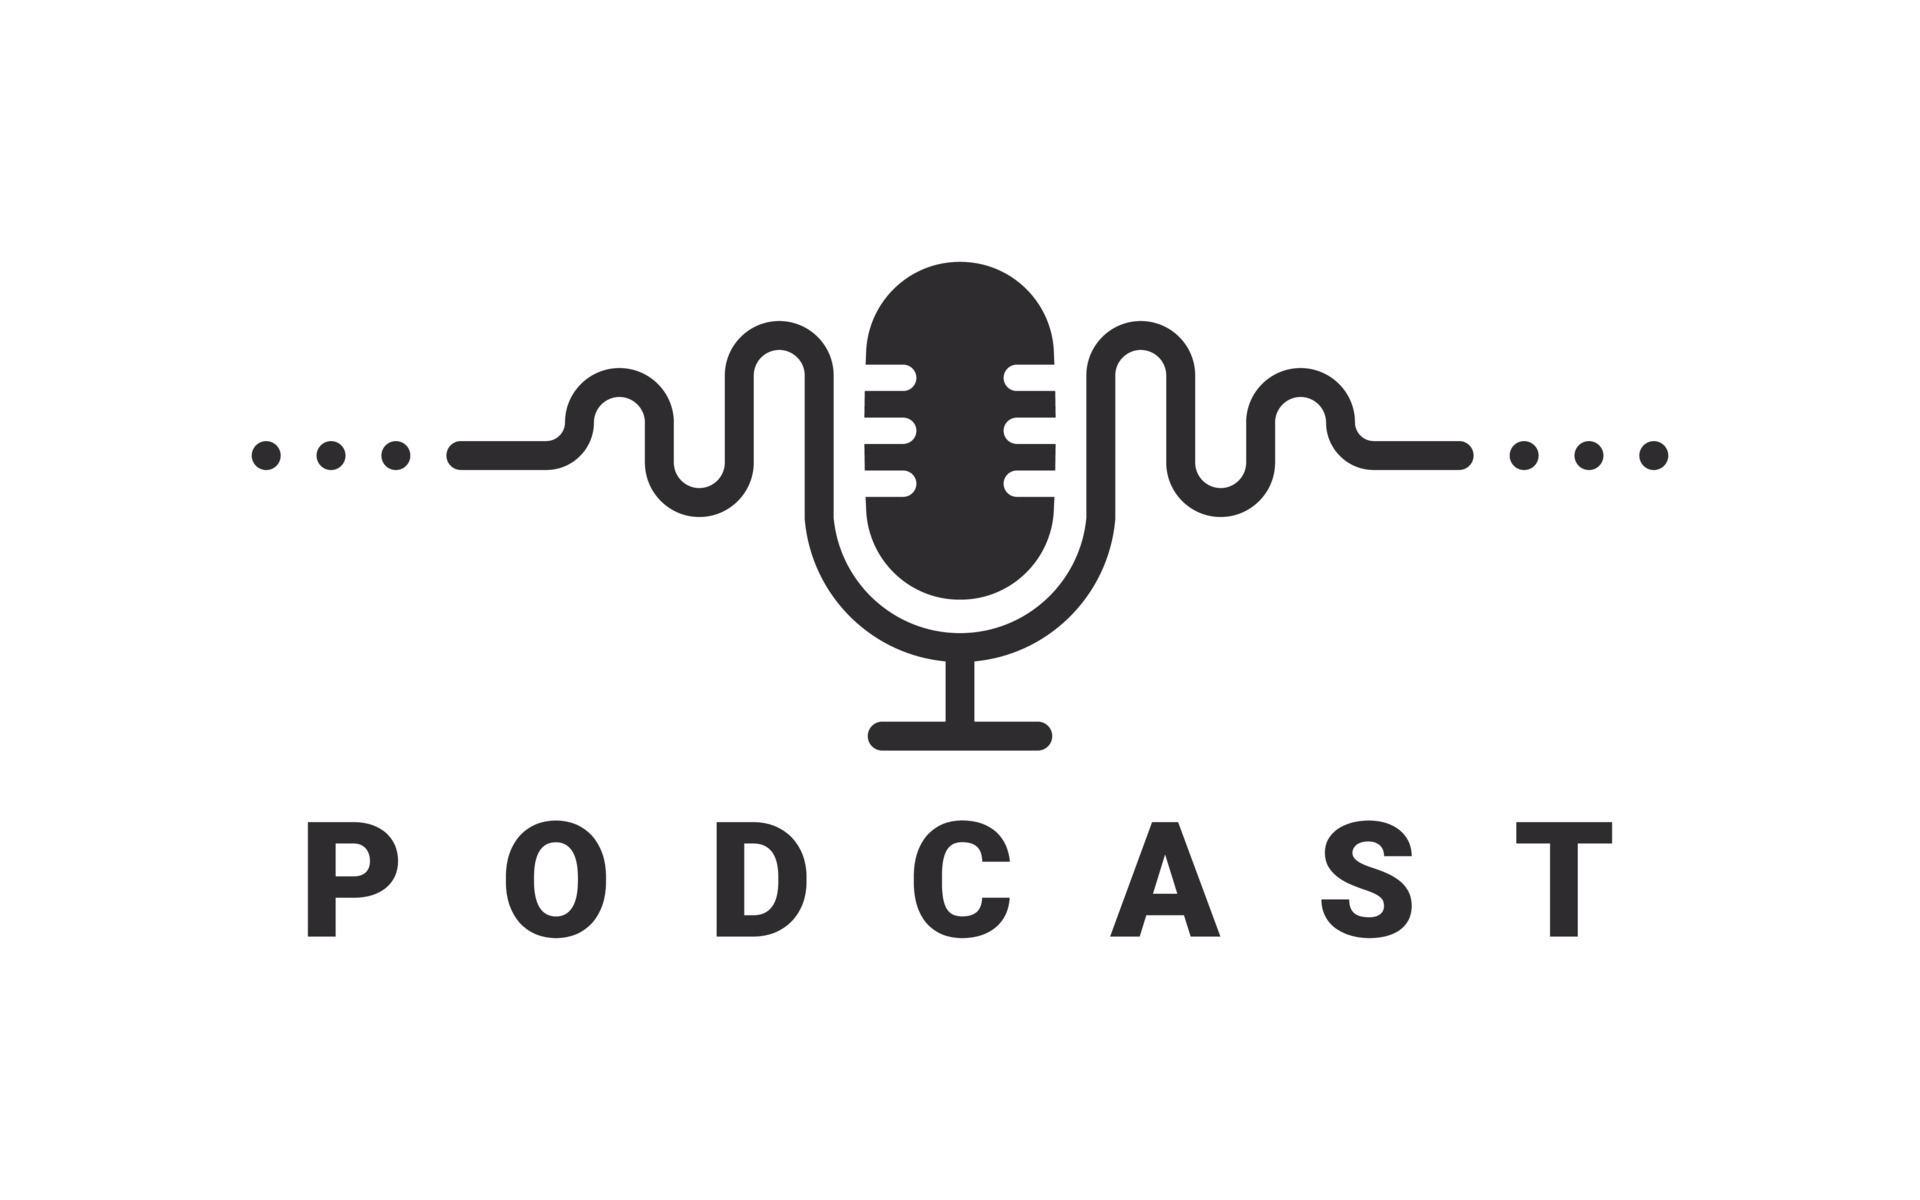 Podcast logo. Radio Logo design. Studio mic icons. Vector illustration ...